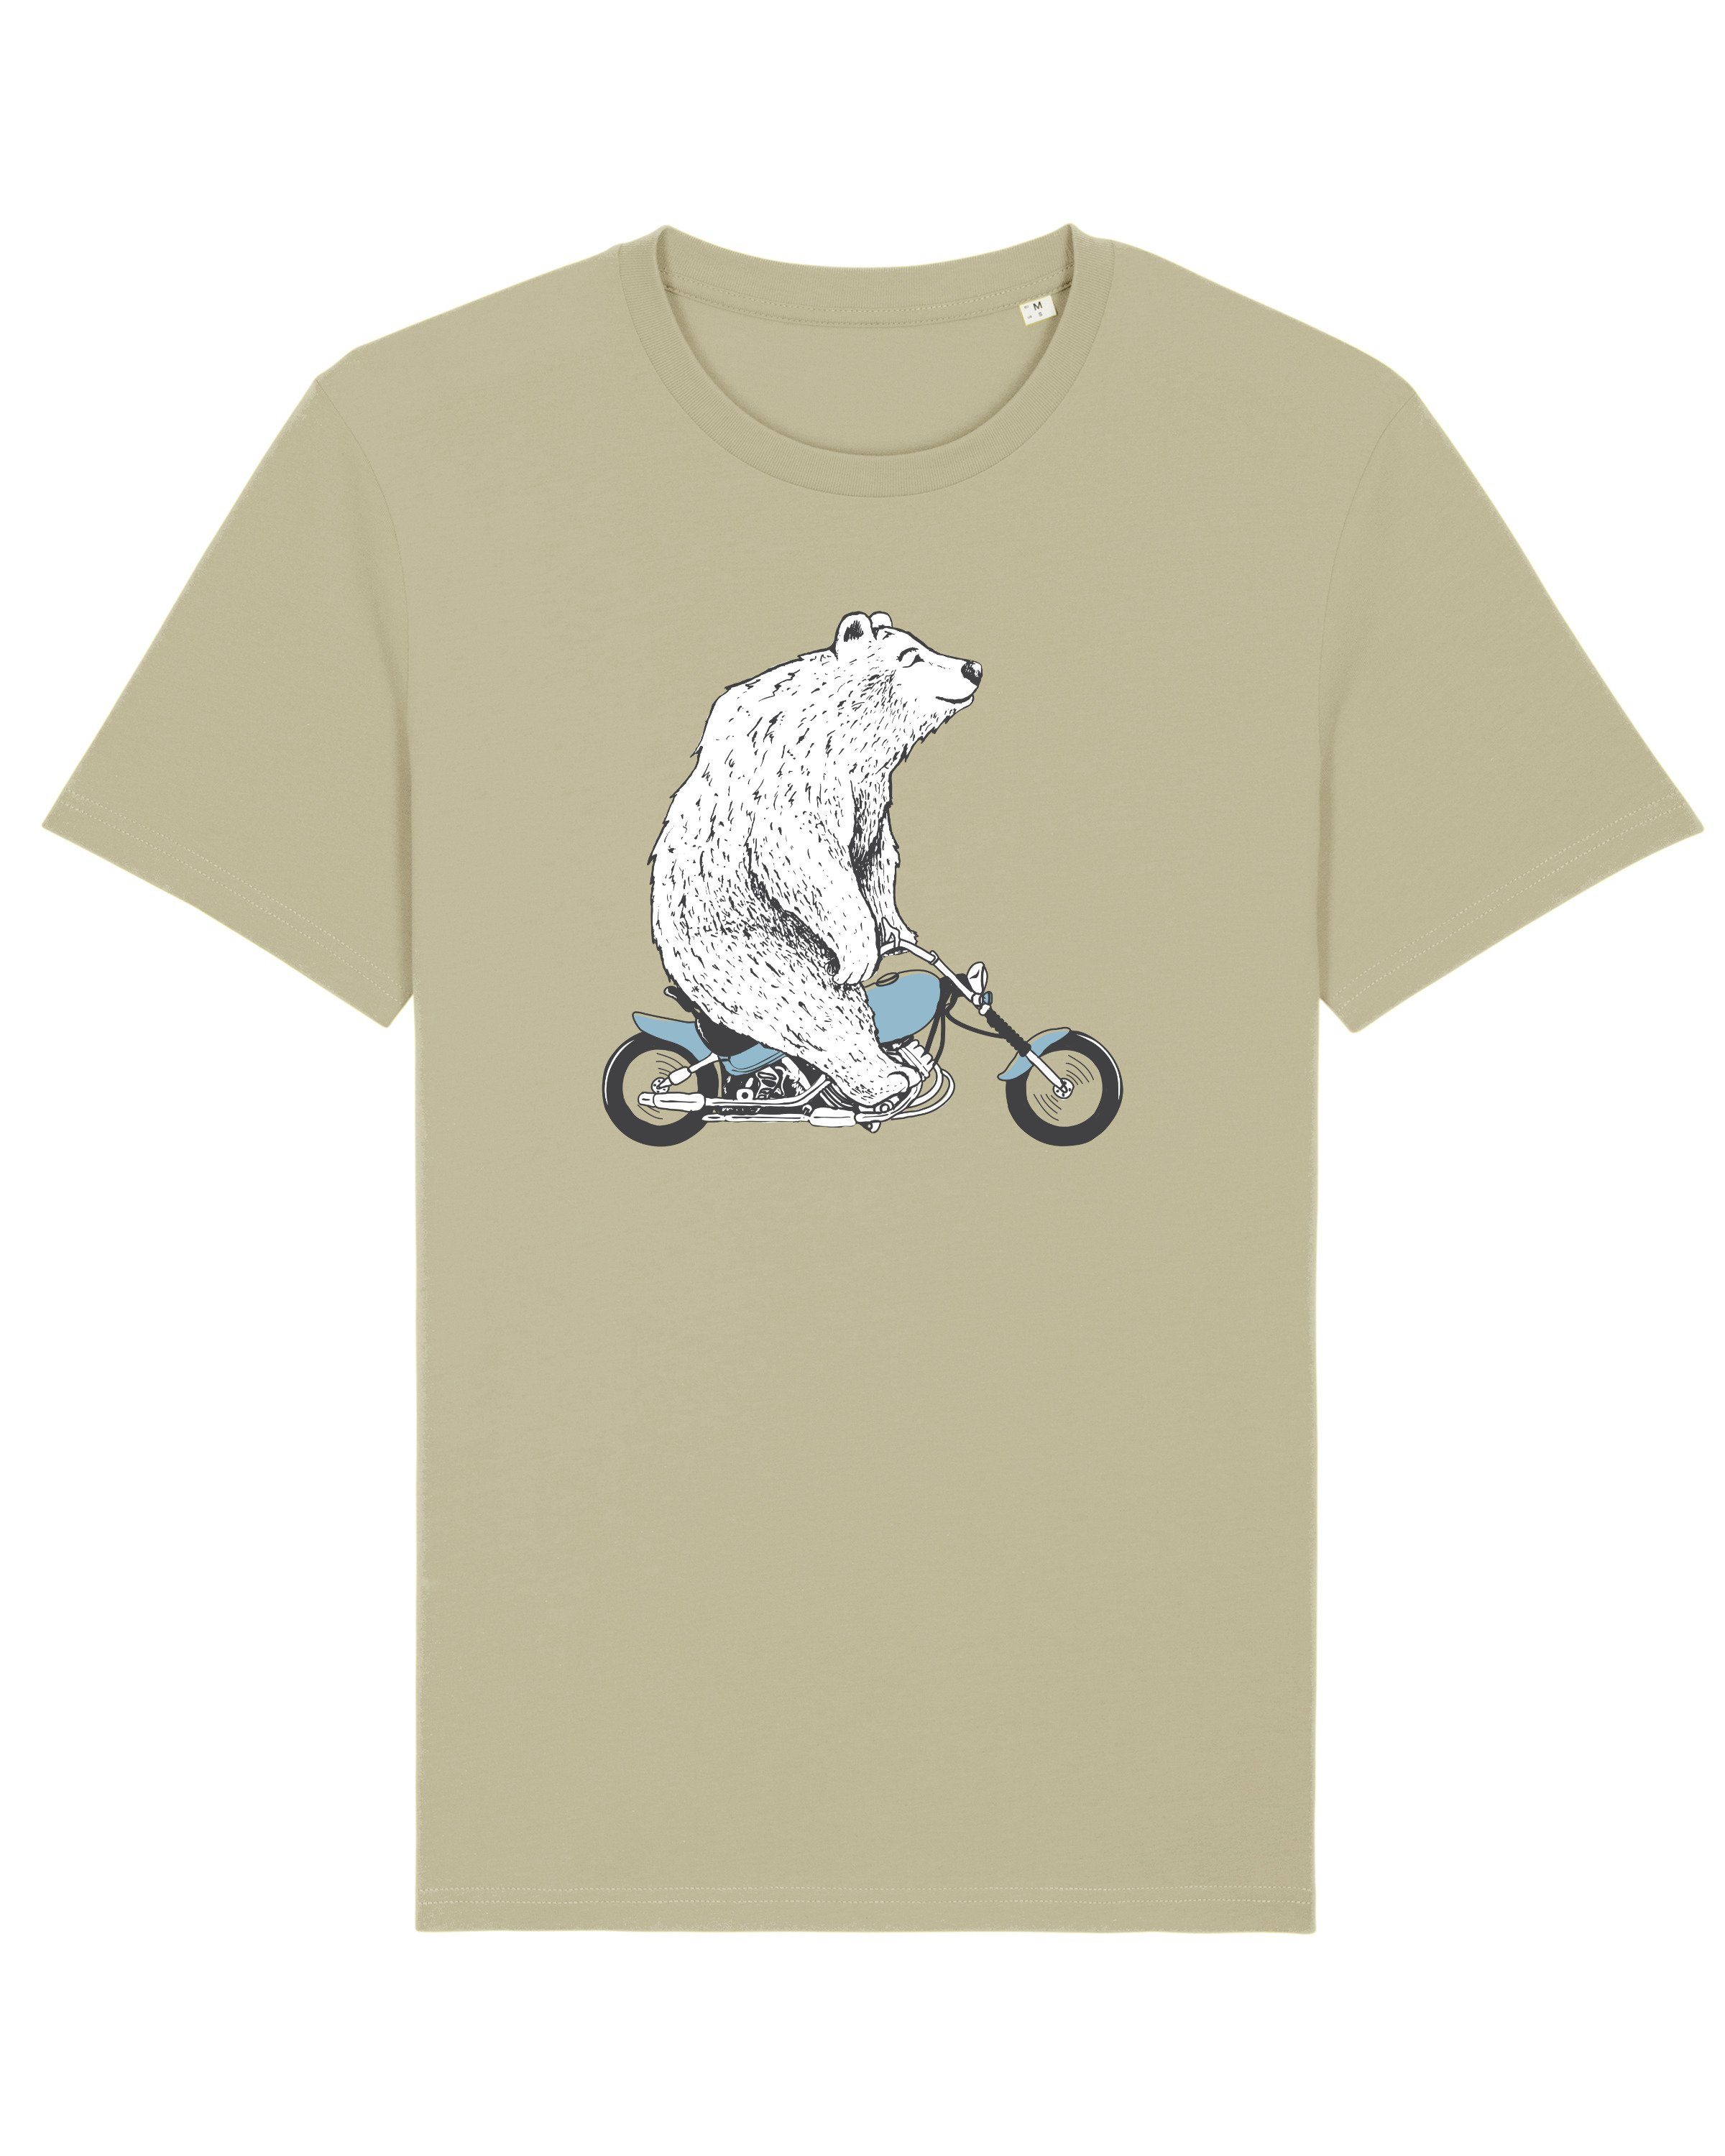 Apparel blau citadel Print-Shirt wat? (1-tlg) Bike auf Bär